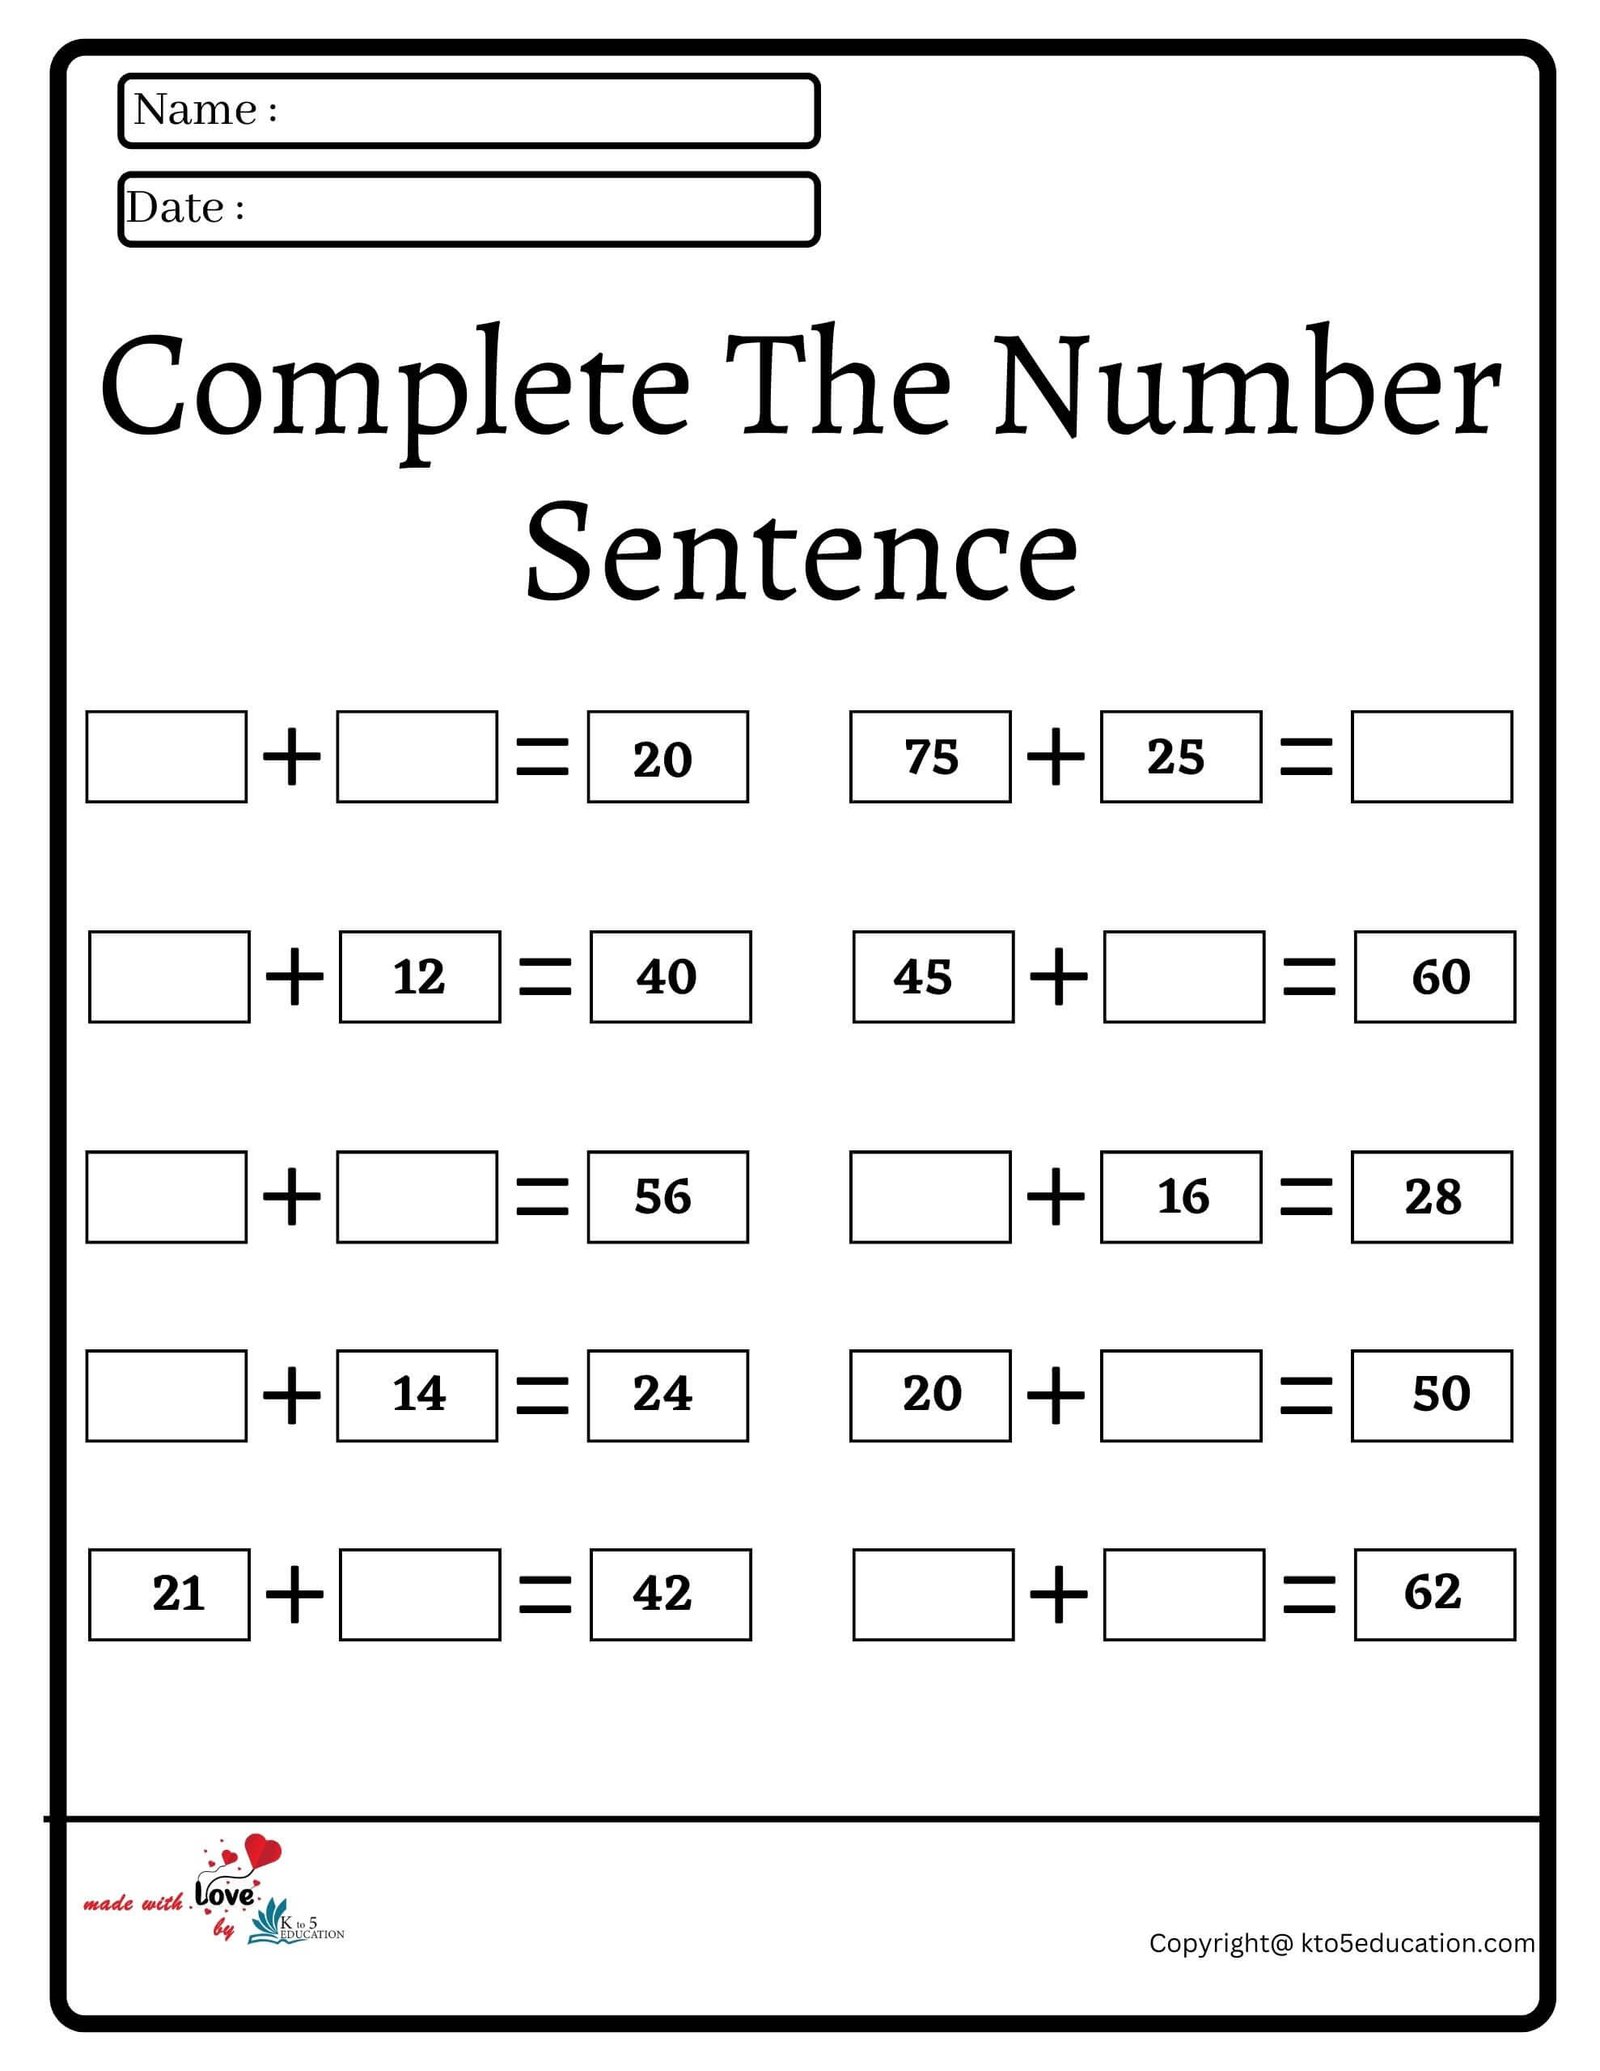 Complete The Number Sentence Worksheet FREE Download